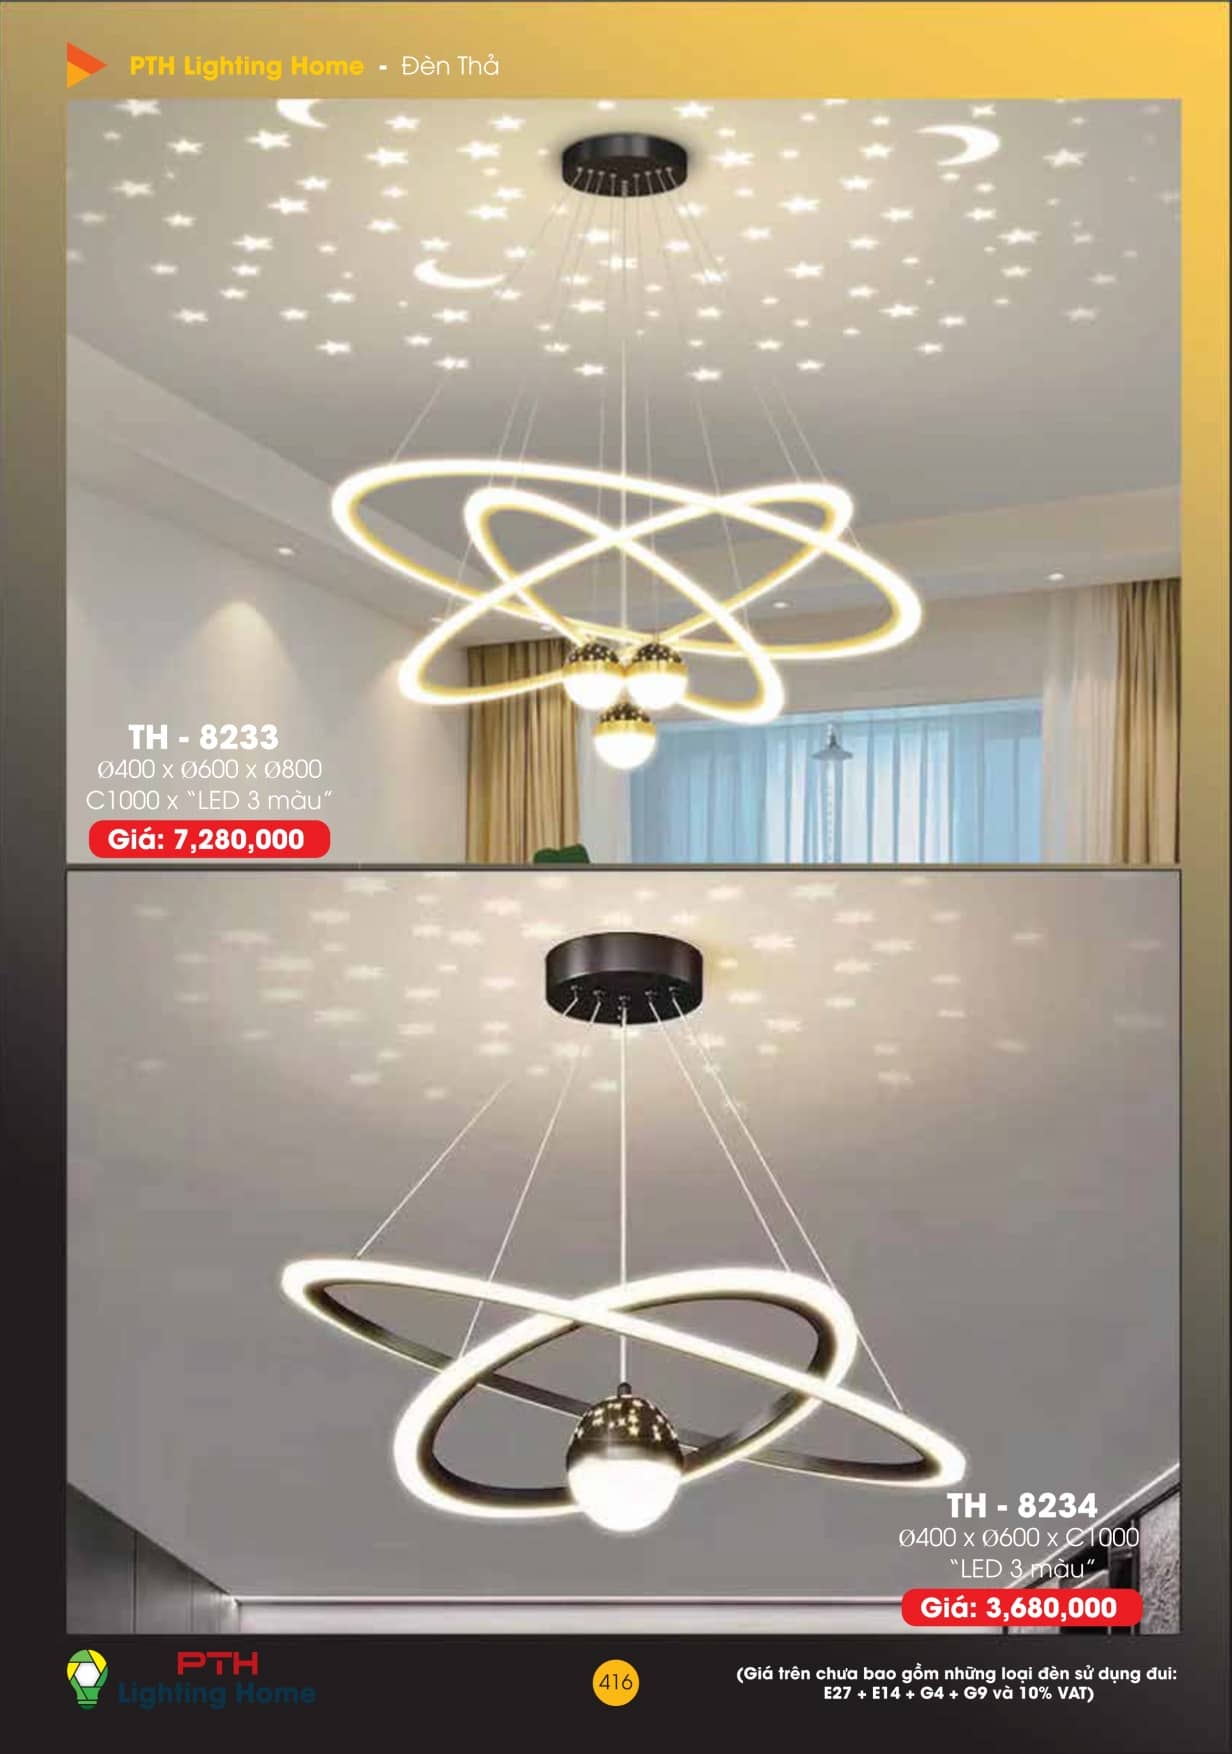 catalogue-bang-gia-den-led-trang-tri-pth-lighting-home-418